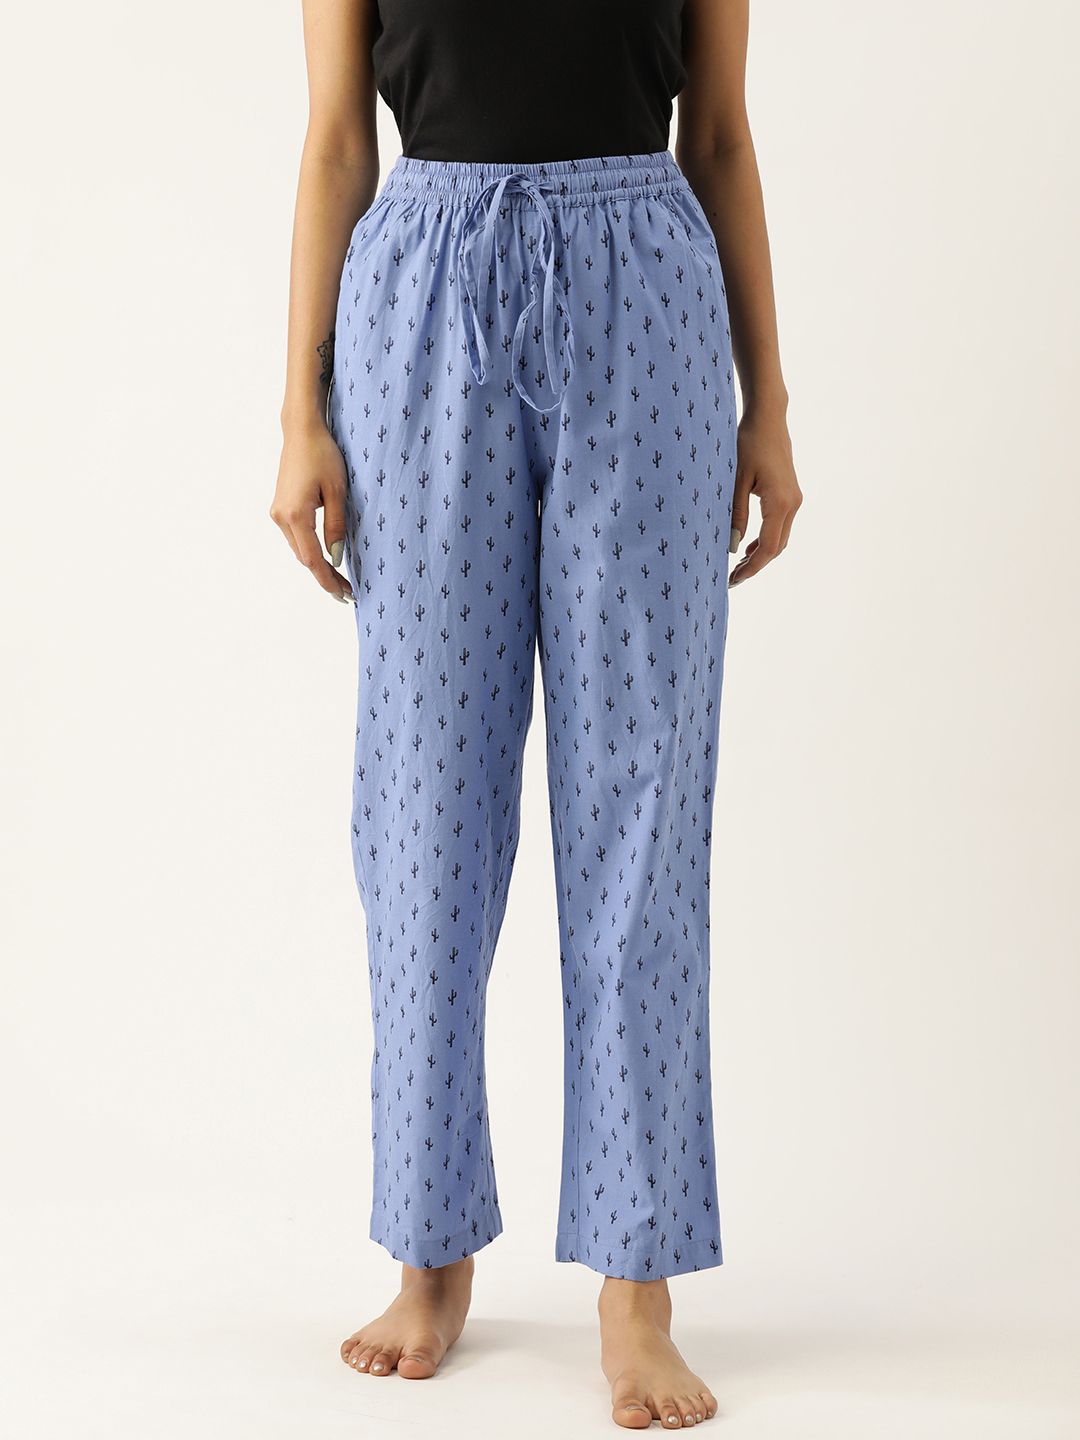 Not Just Pyjamas Women Blue Printed Cotton Lounge Pants Price in India